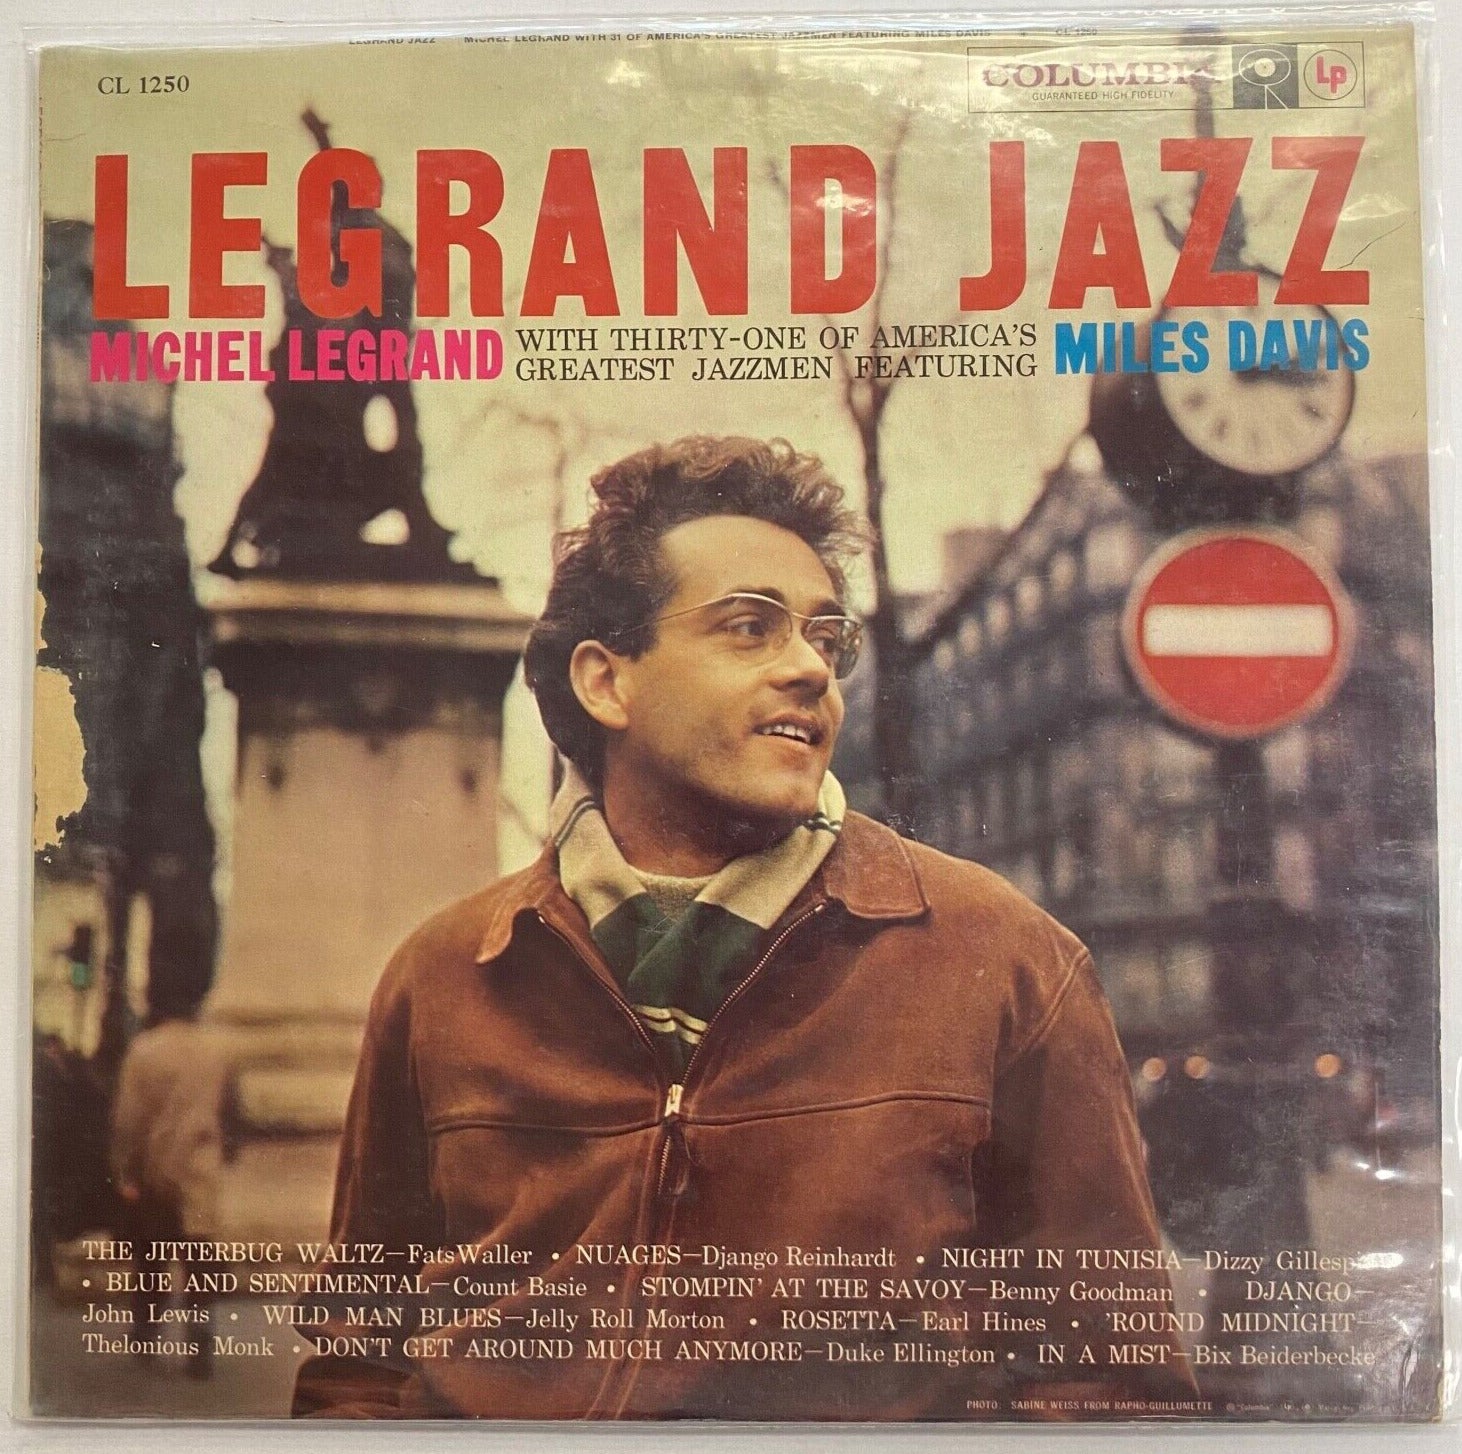 Legrand Jazz by Michel Legrand (Record, 2017)